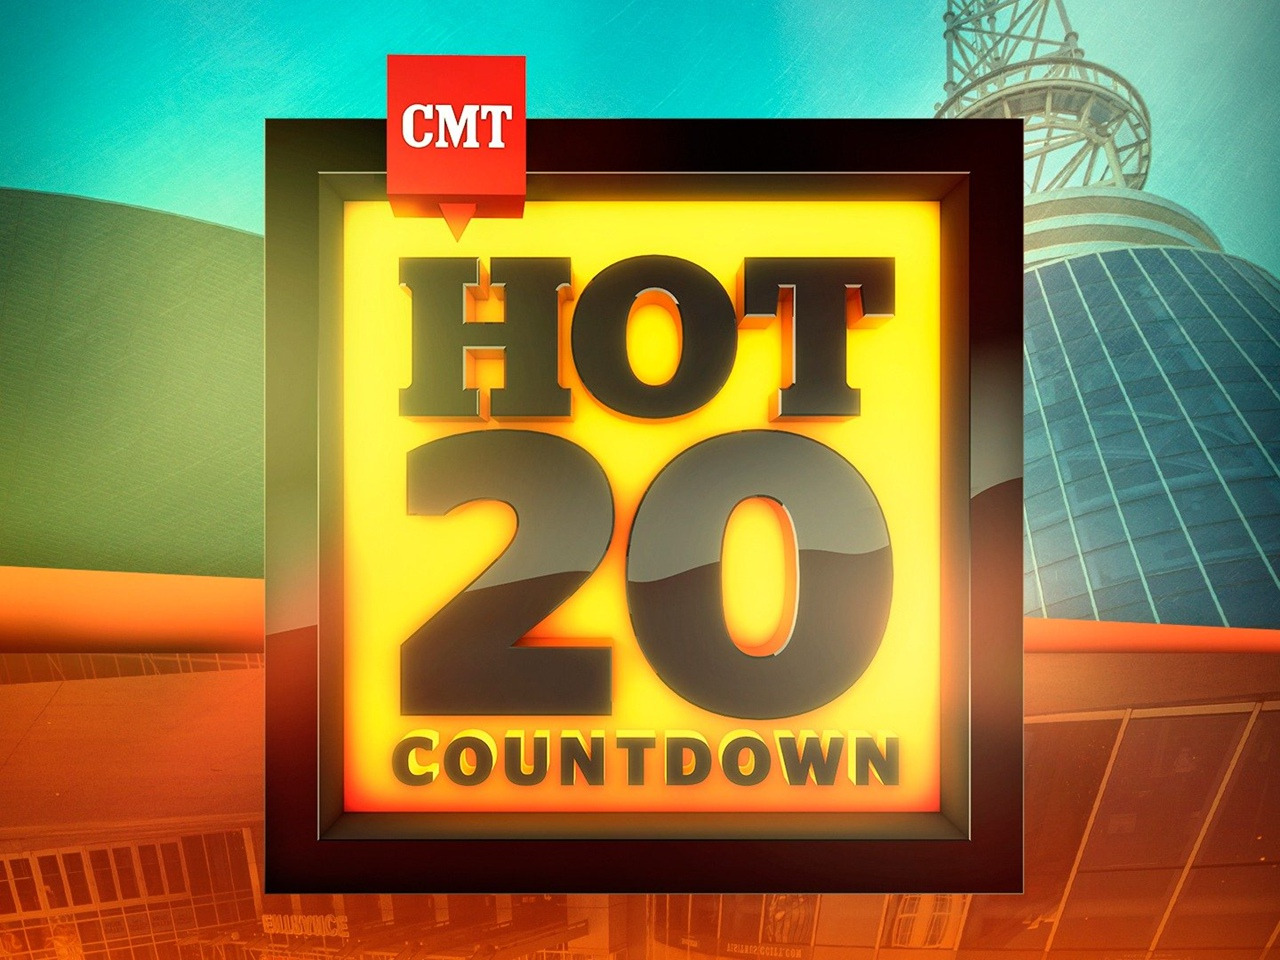 Show CMT Top 20 Countdown